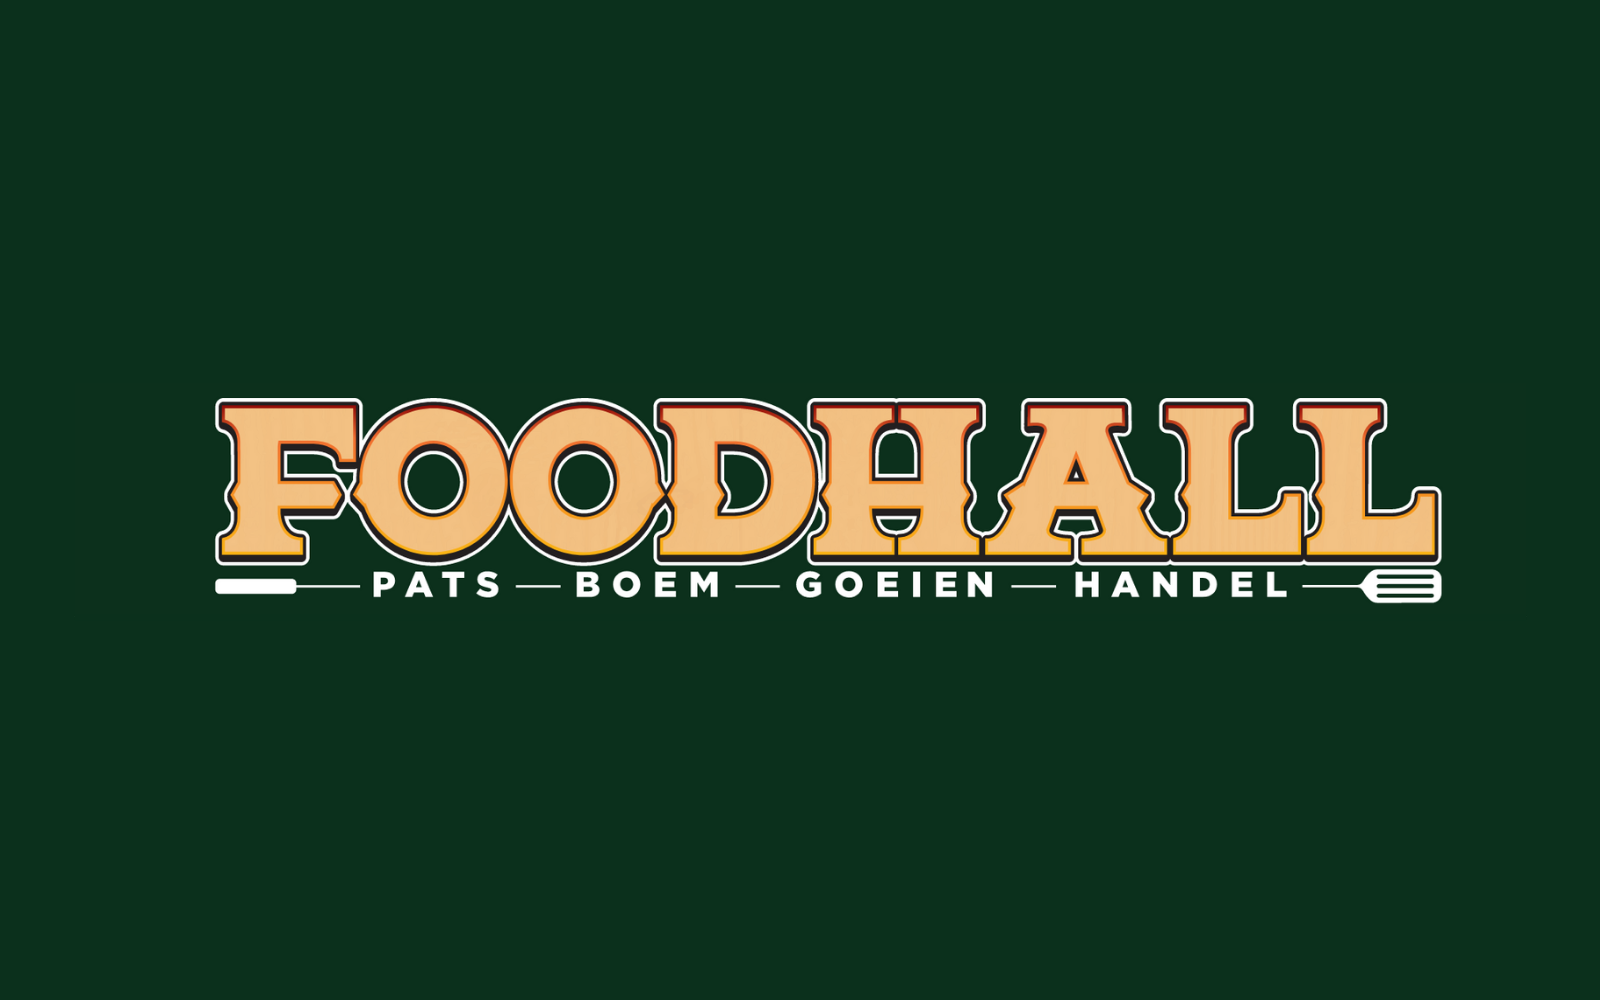 Foodhall Sint Willebrord